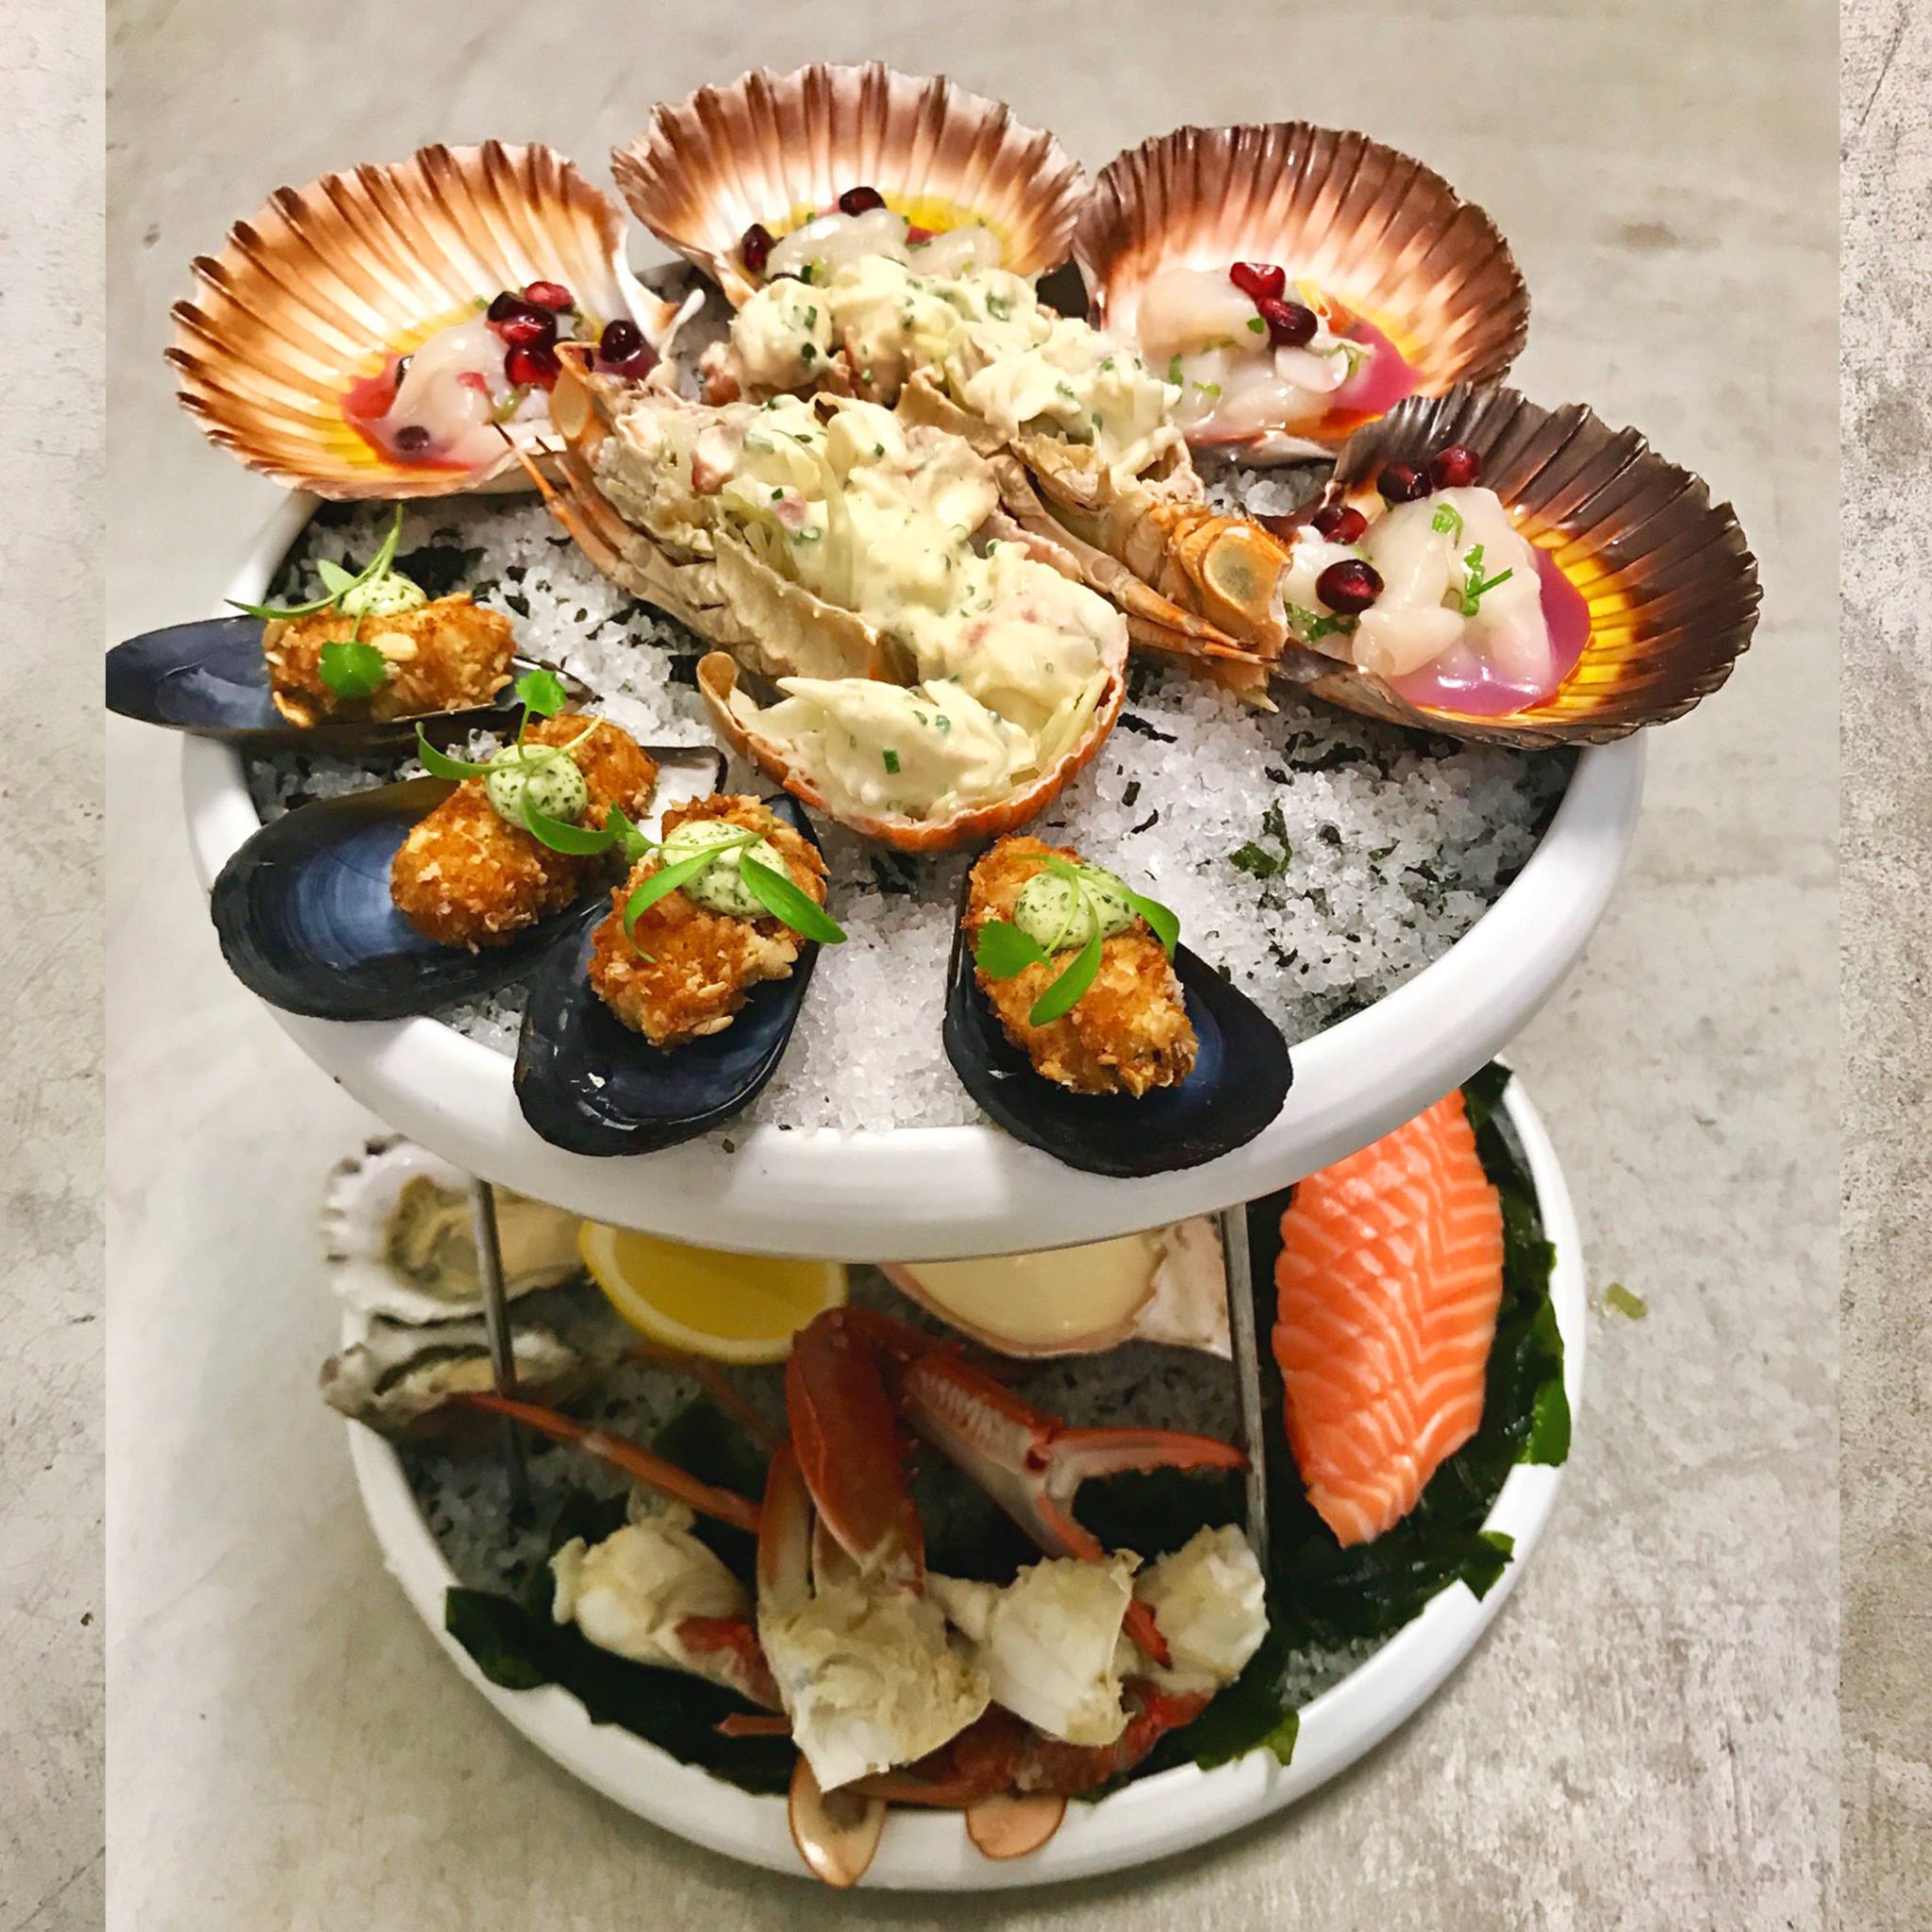 Seafood platter menu item at Cirrus Dining restaurant, Barangaroo